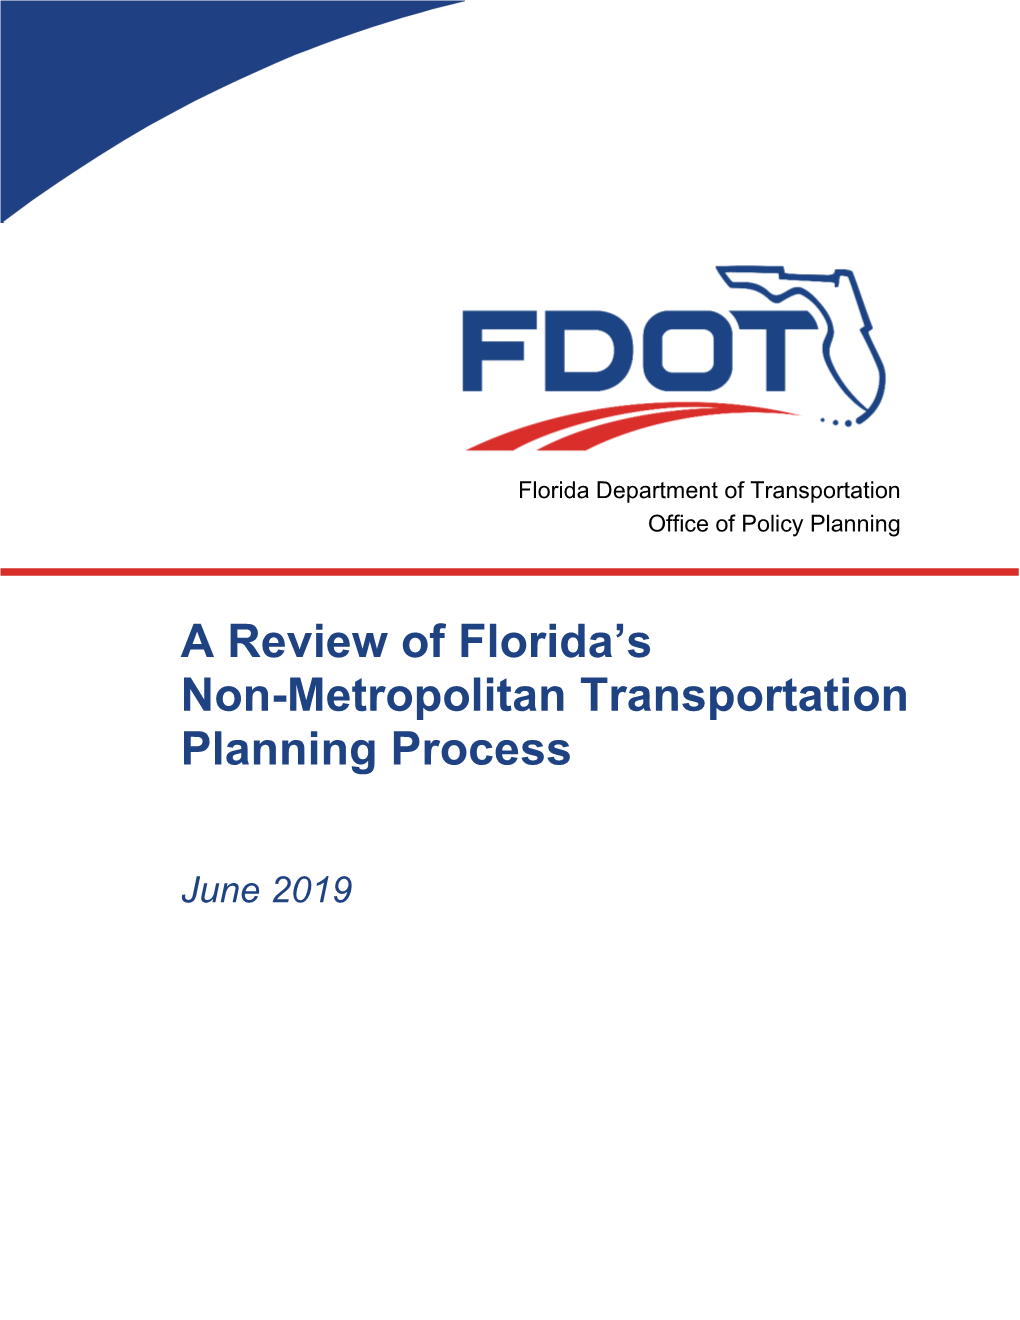 A Review of Florida's Non-Metropolitan Transportation Planning Process